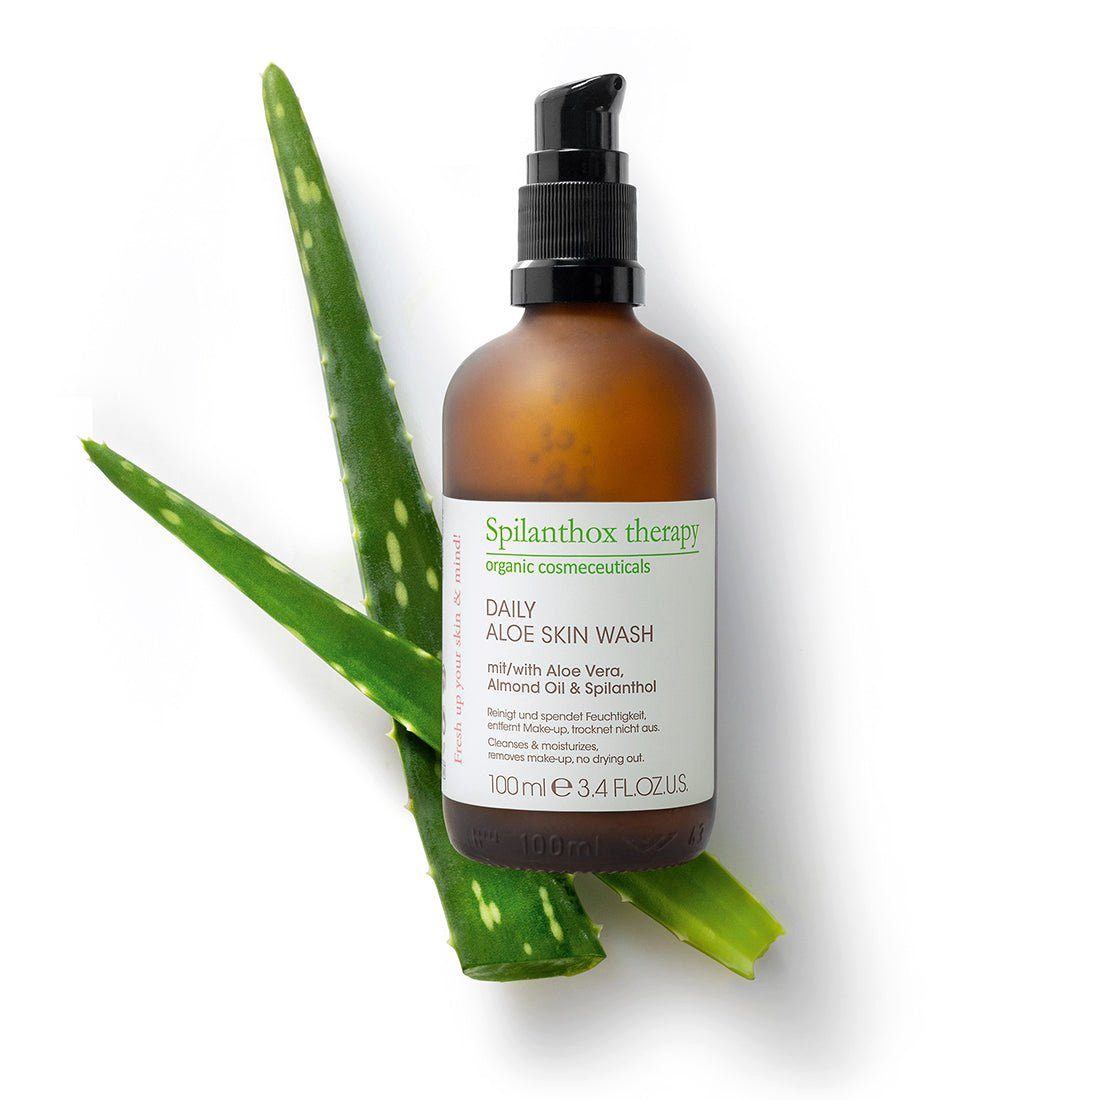 Spilanthox therapy Aloe Gesichtspflege Wash Skin Daily